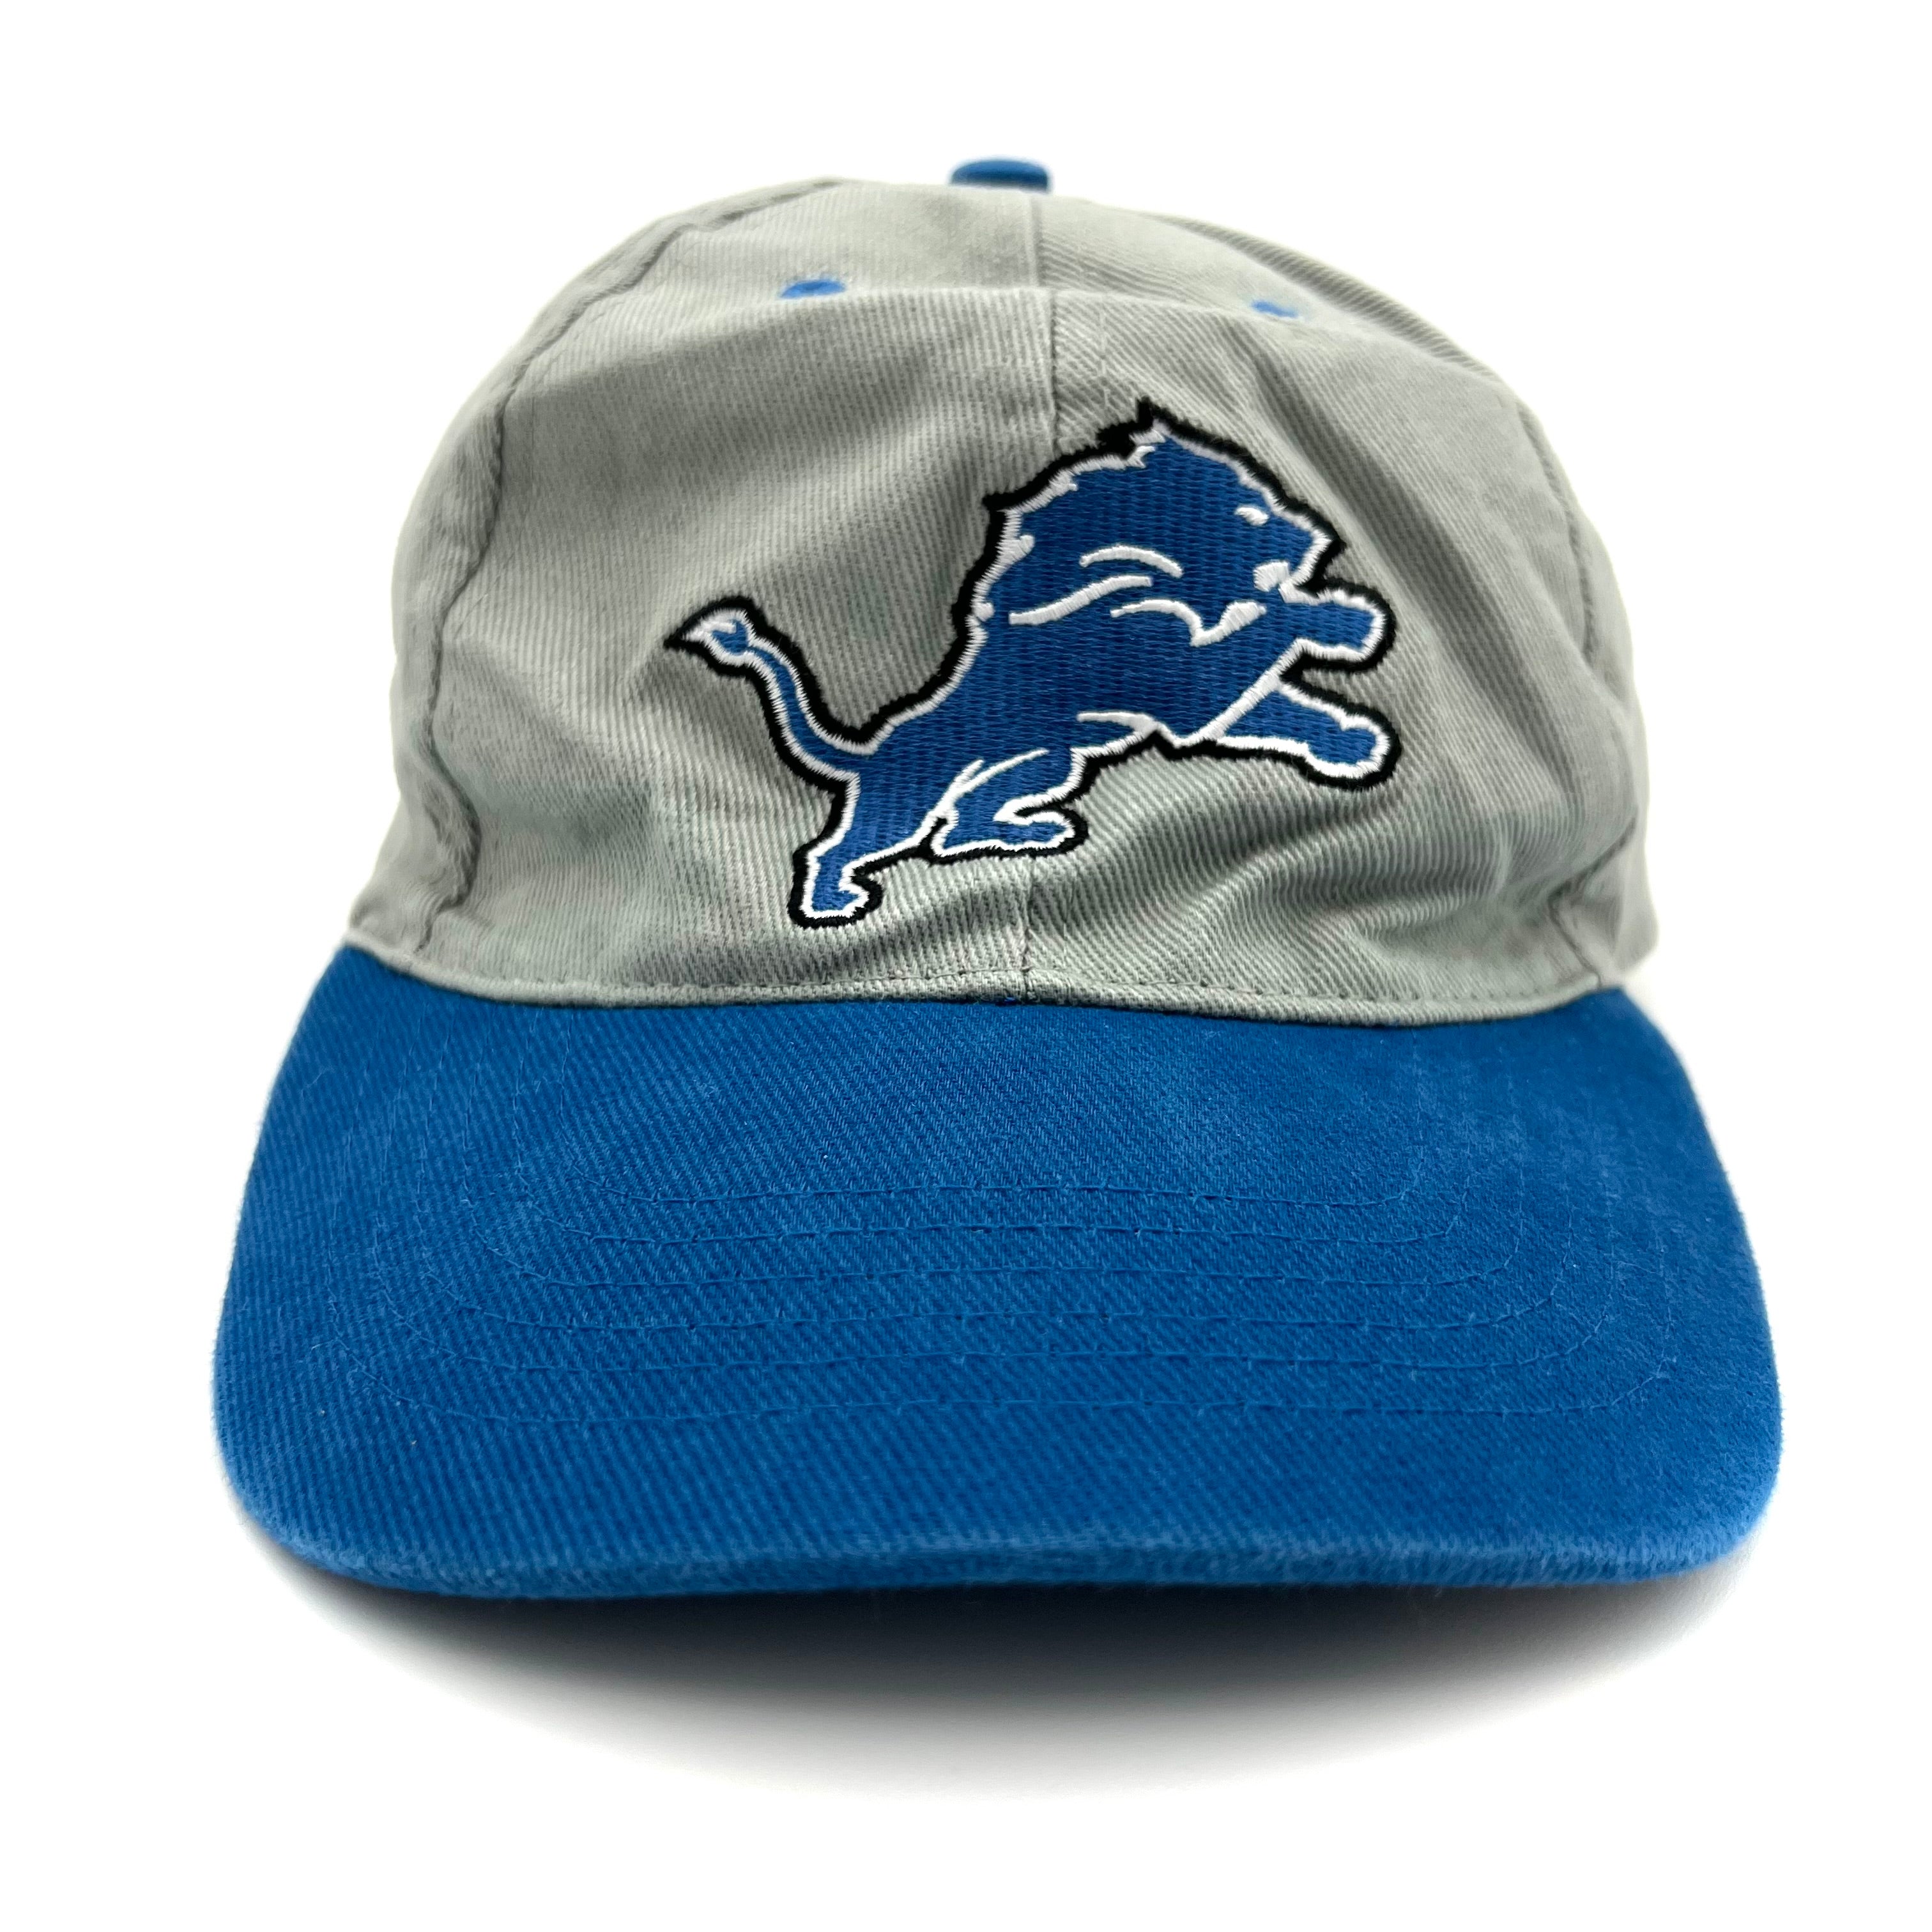 Vintage NFL Detroit Lions Fitted Hat - Adult OSFA